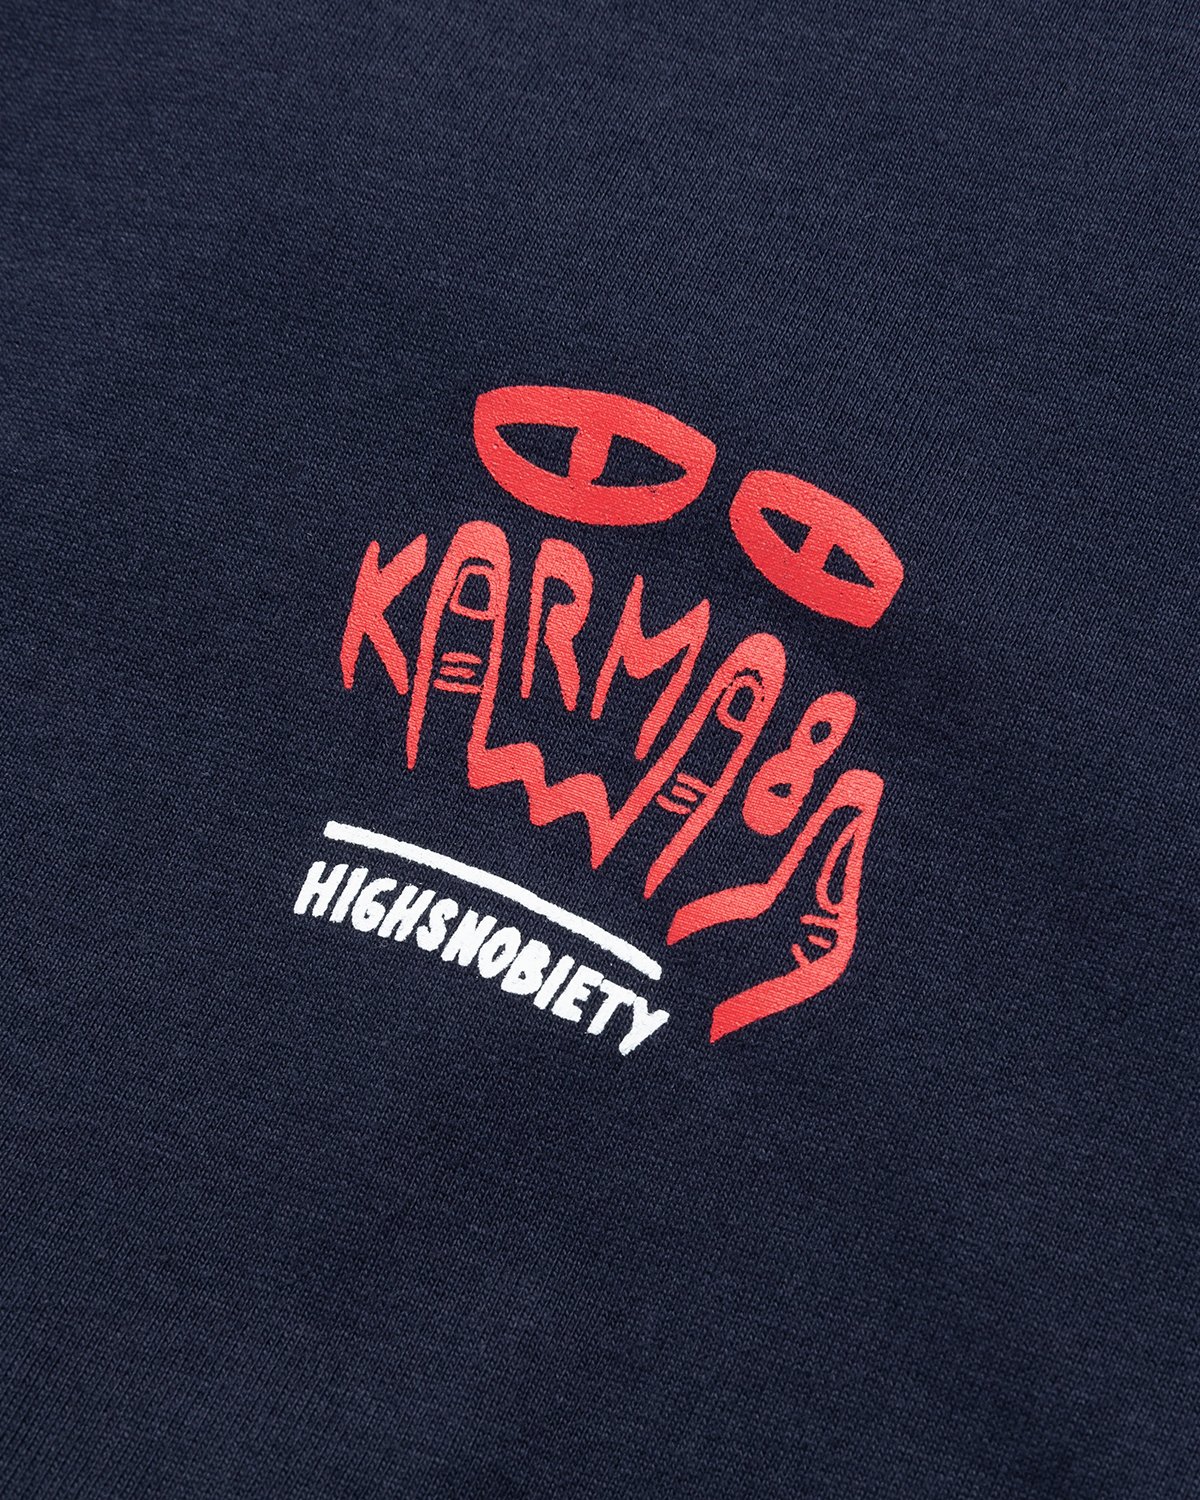 KARMA8A x Highsnobiety - HS Sports High Longsleeve Blue - Clothing - Blue - Image 5